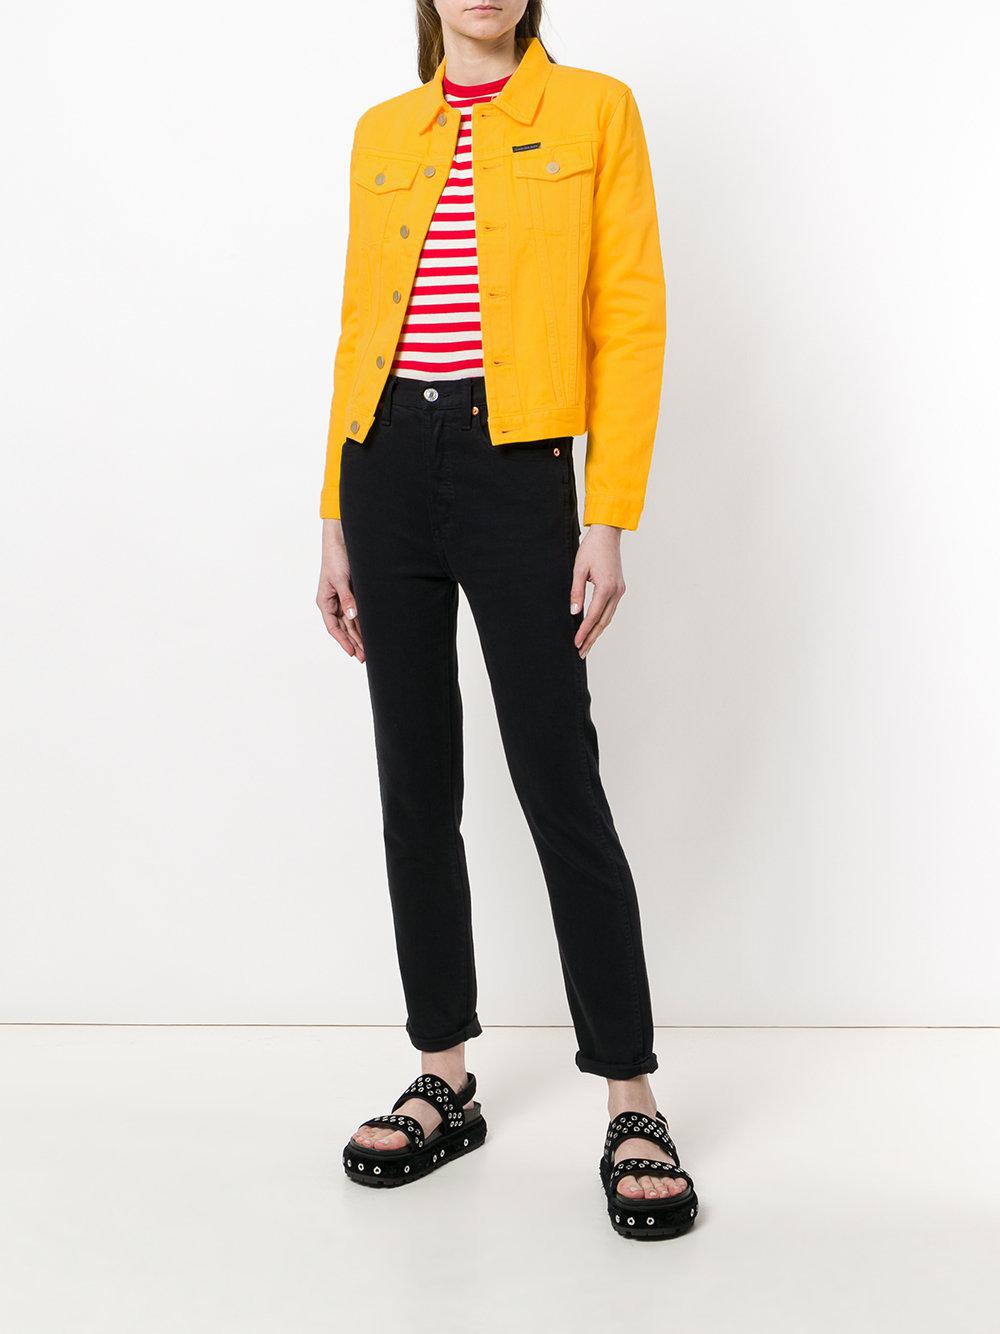 Calvin Klein Classic Denim Jacket in Yellow & Orange (Yellow) | Lyst